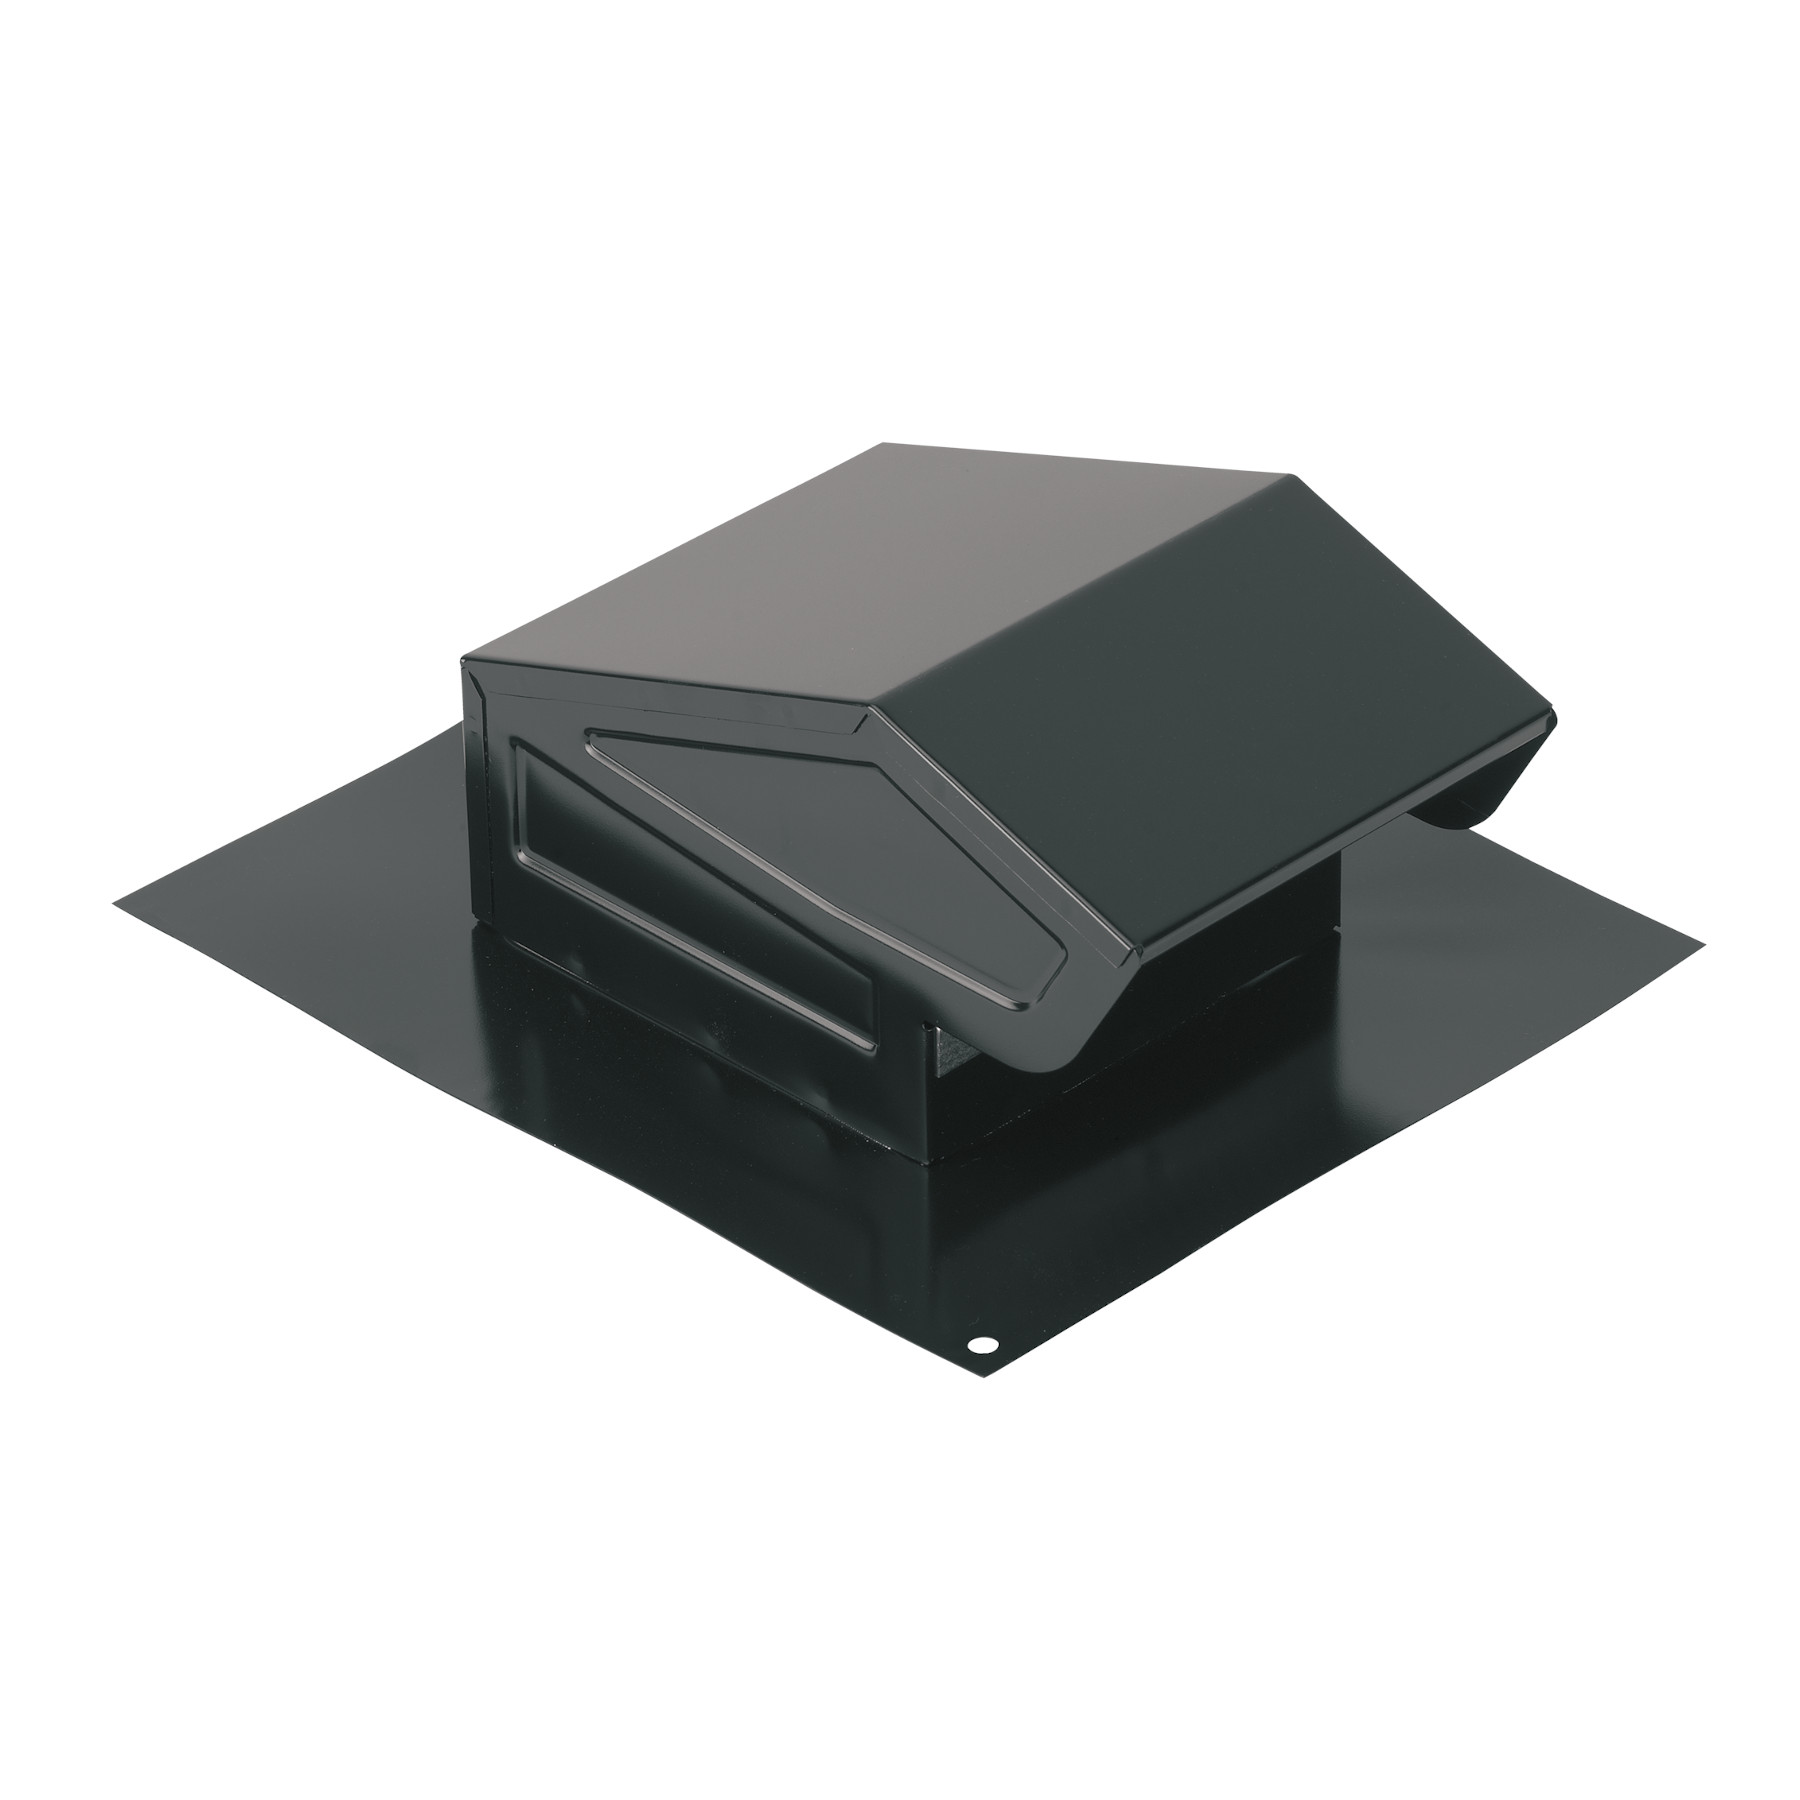 636 Broan Nutone Steel Roof Cap For 3 Inch Or 4 Inch Round Duct W Damper Birdscreen Black